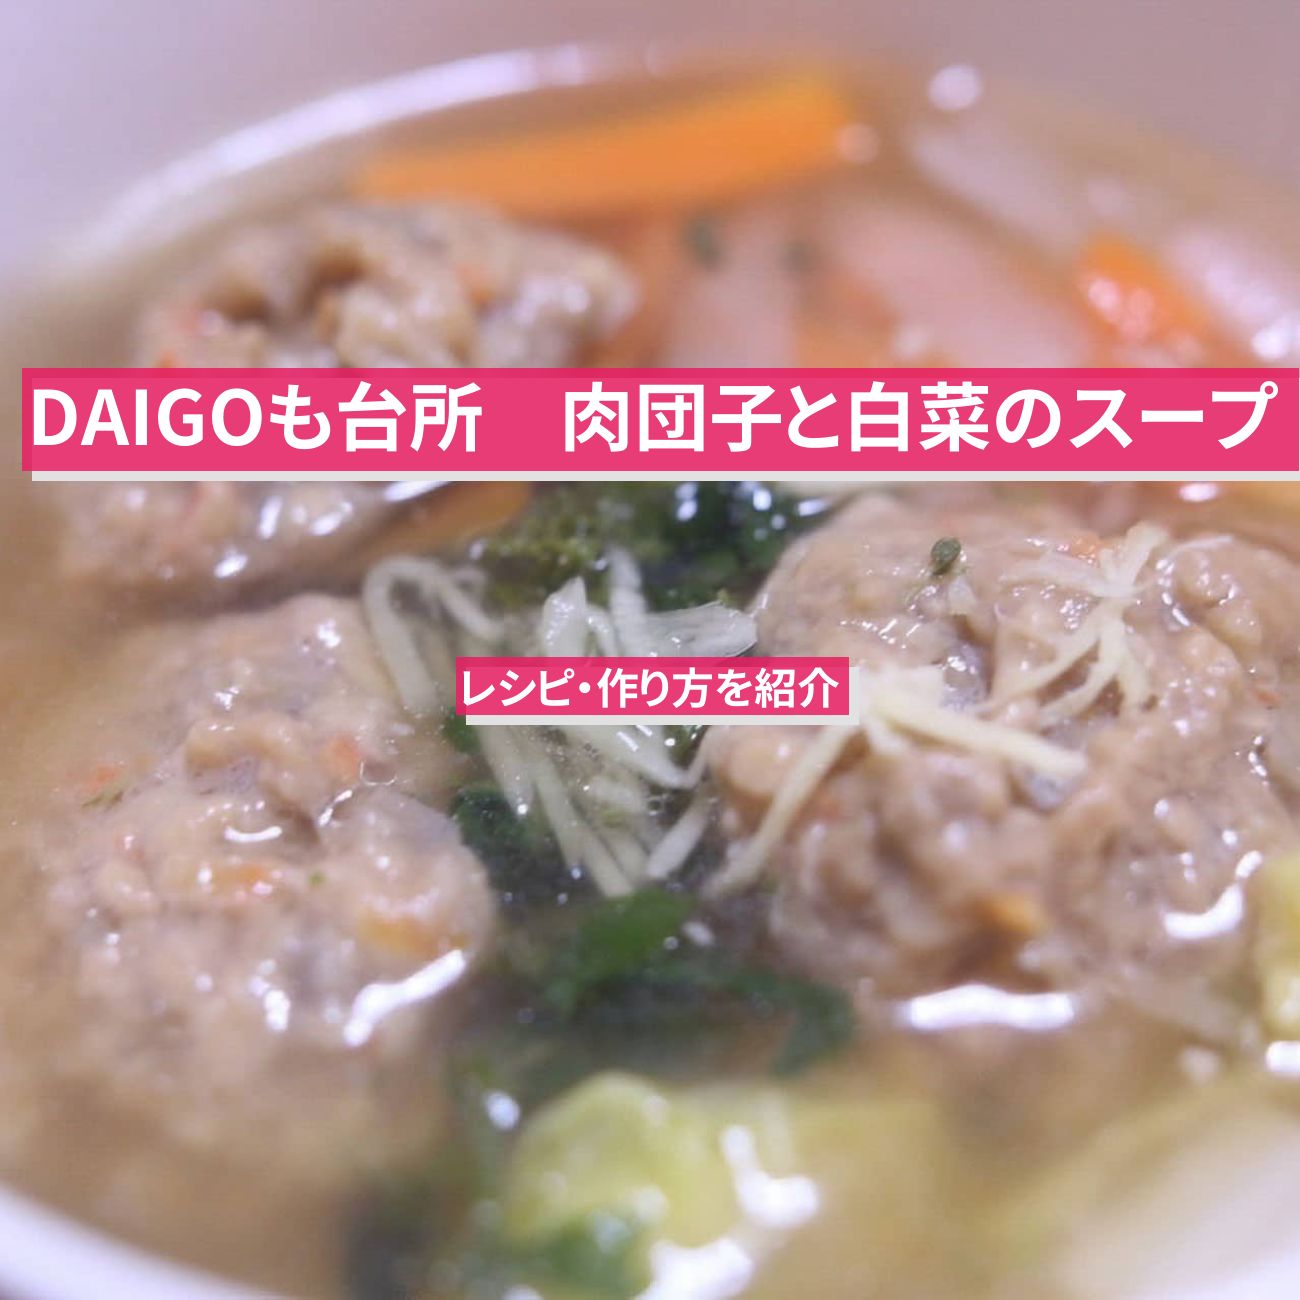 【DAIGOも台所】『肉団子と白菜のスープ』のレシピ・作り方を紹介〔ダイゴも台所〕